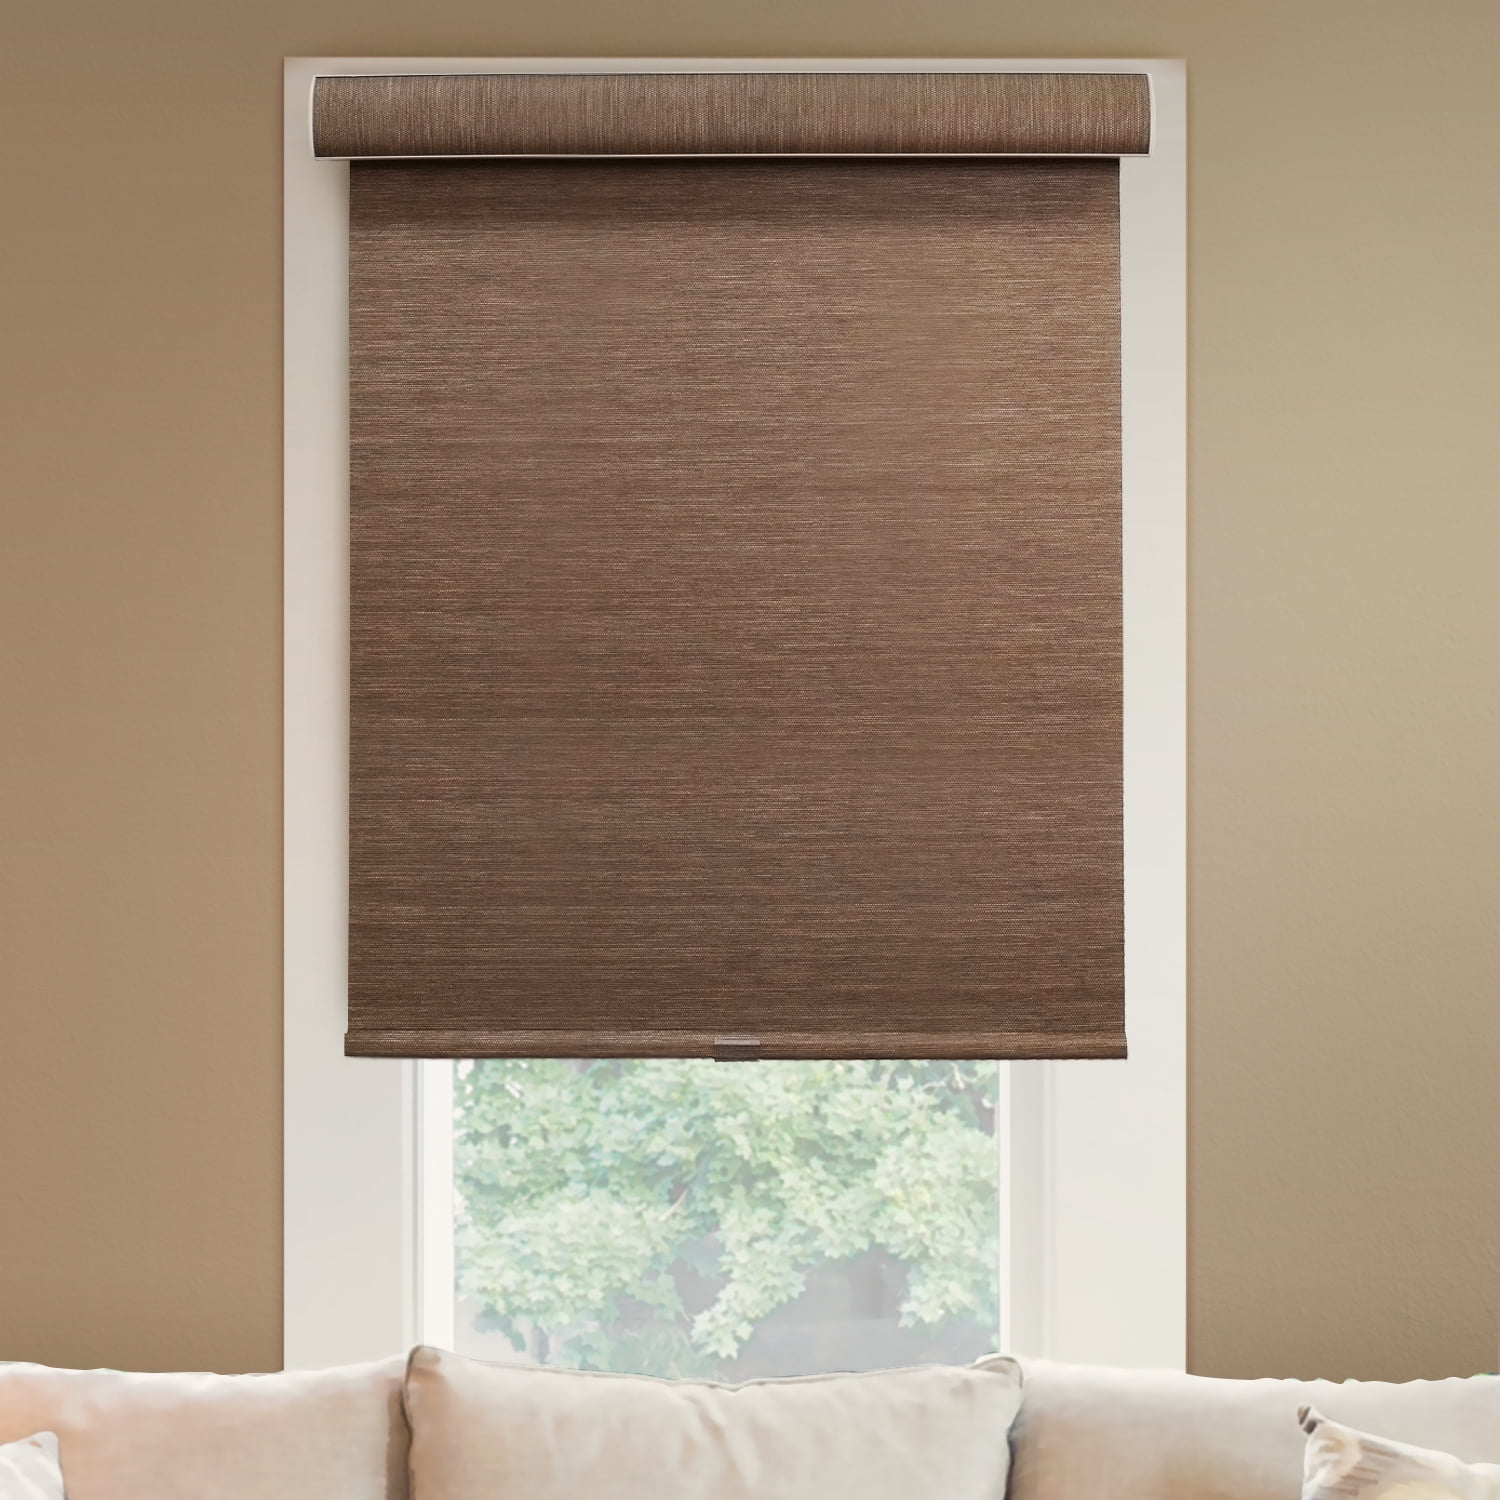 62.5x64 in Espresso Faux Wood Blind Cordless Room Darkening Privacy Window Shade 